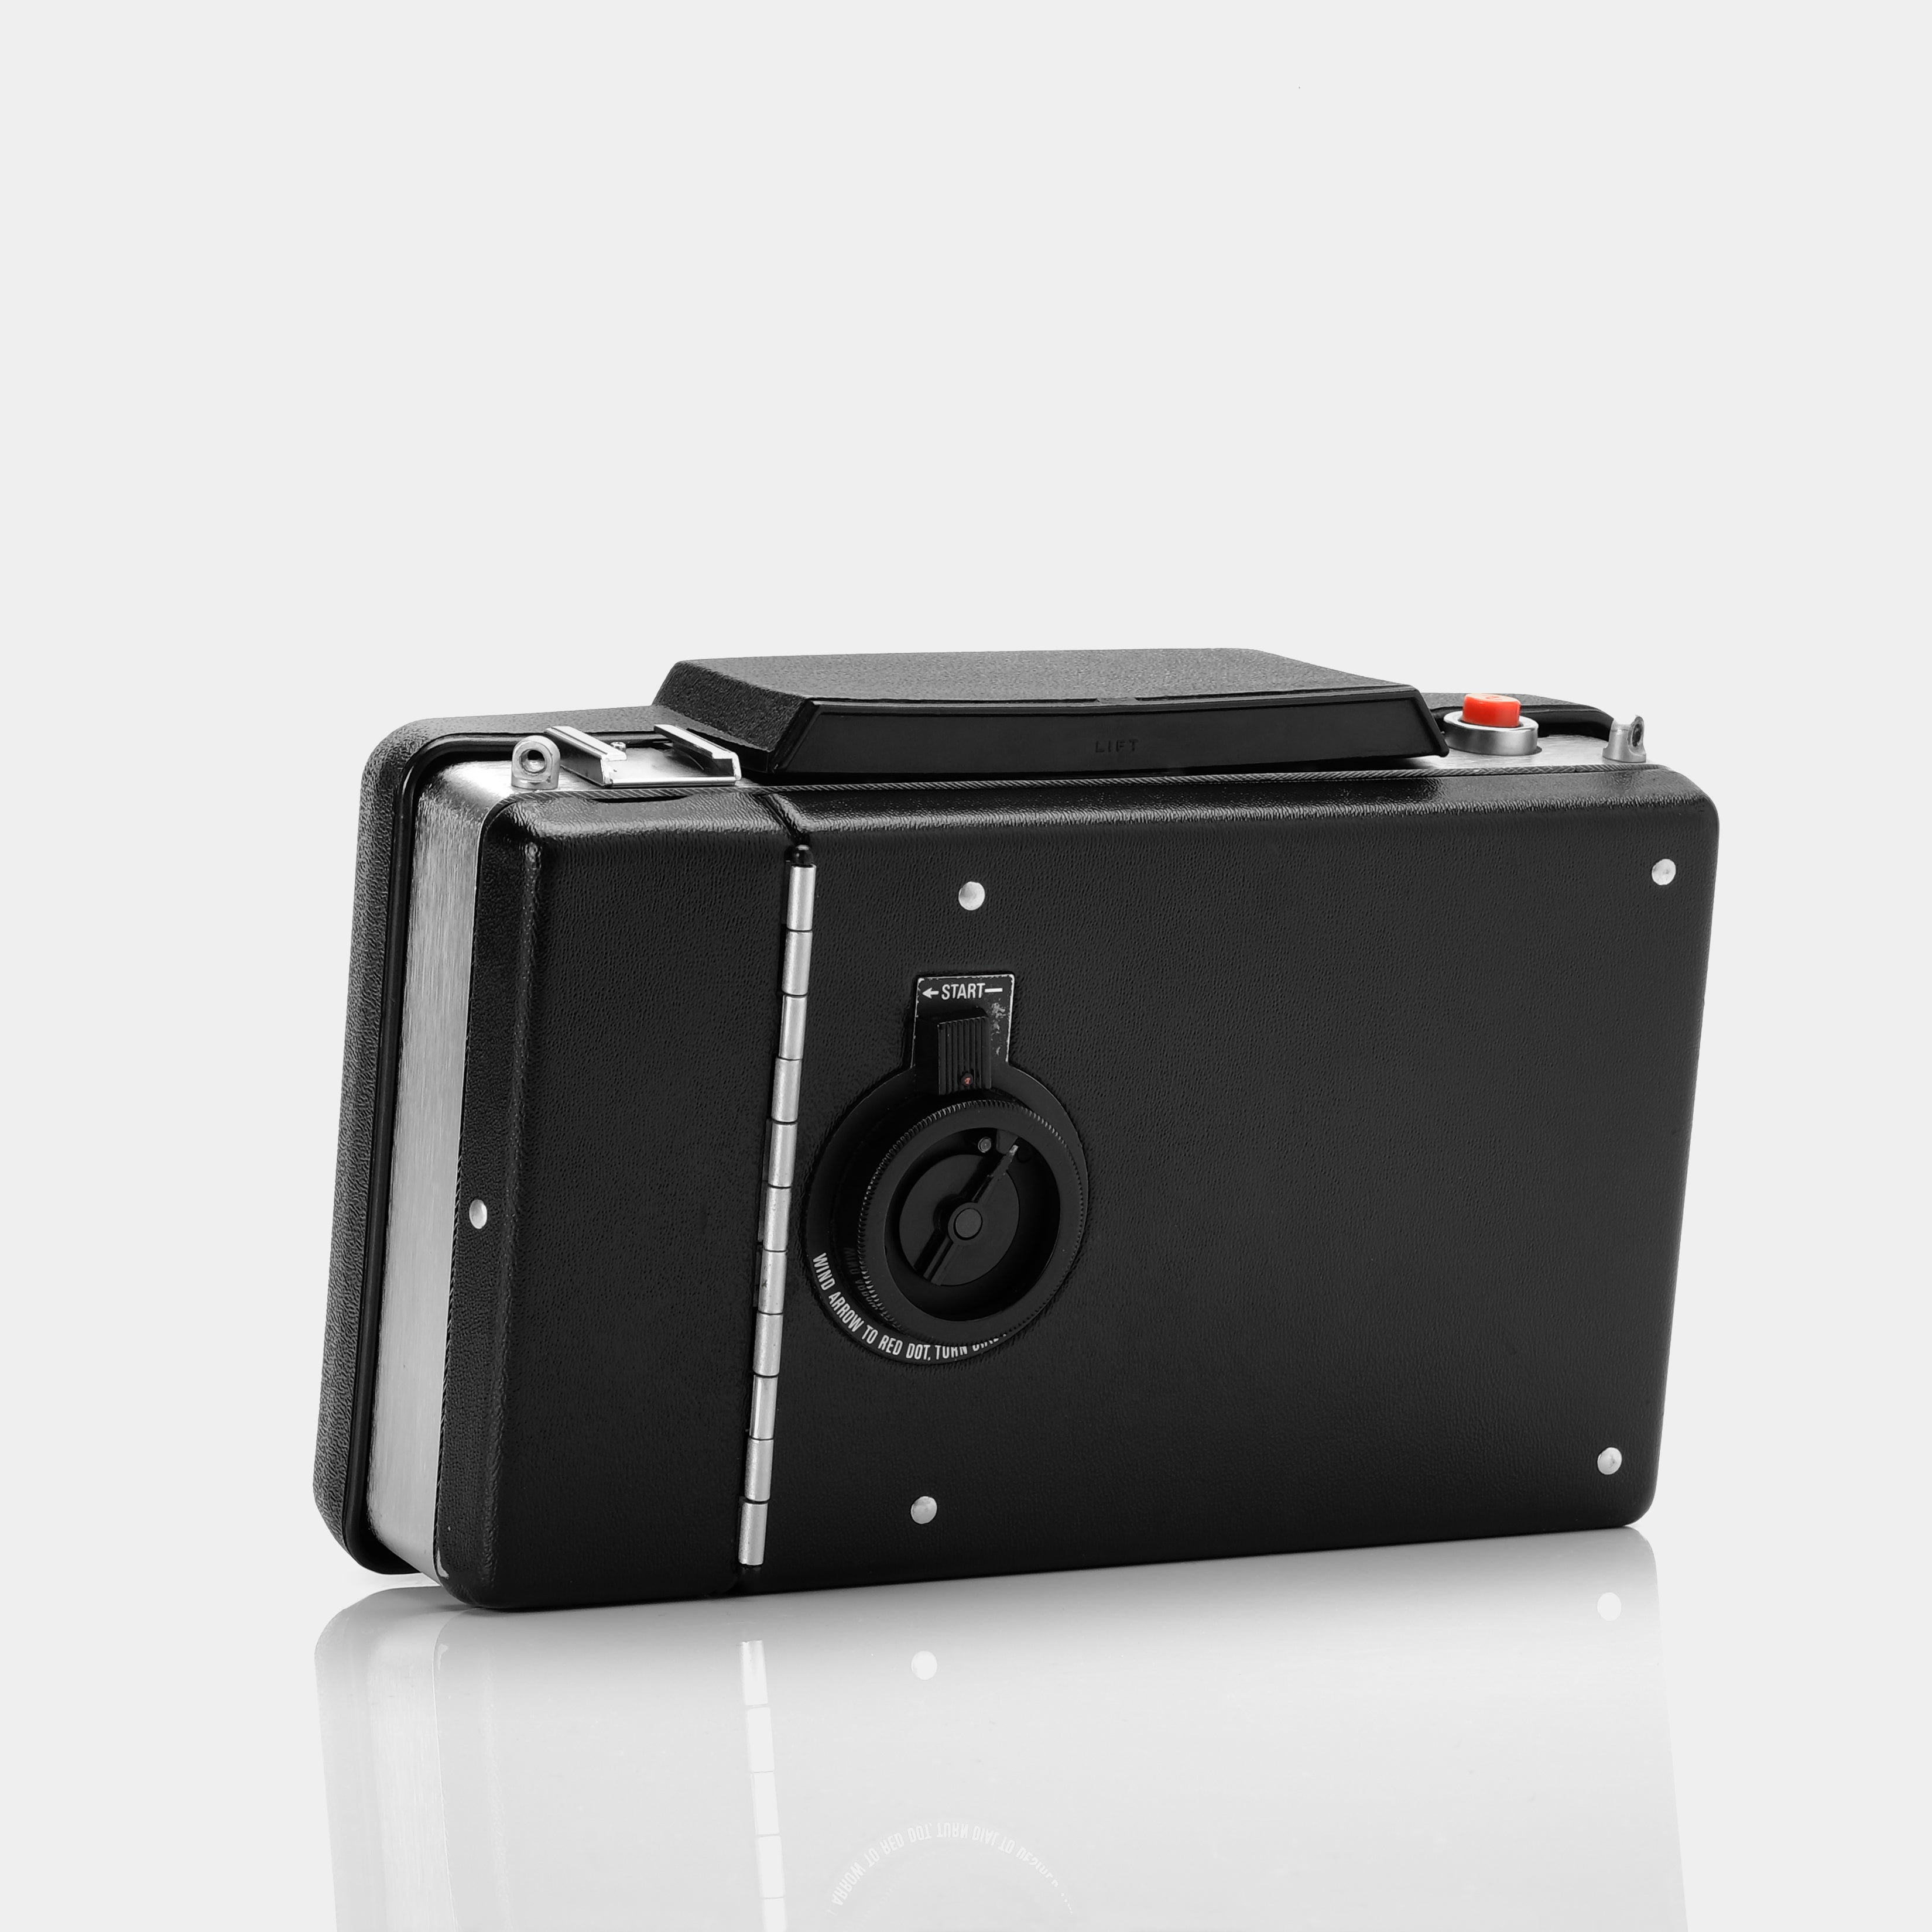 Polaroid Model 195 Packfilm Land Camera